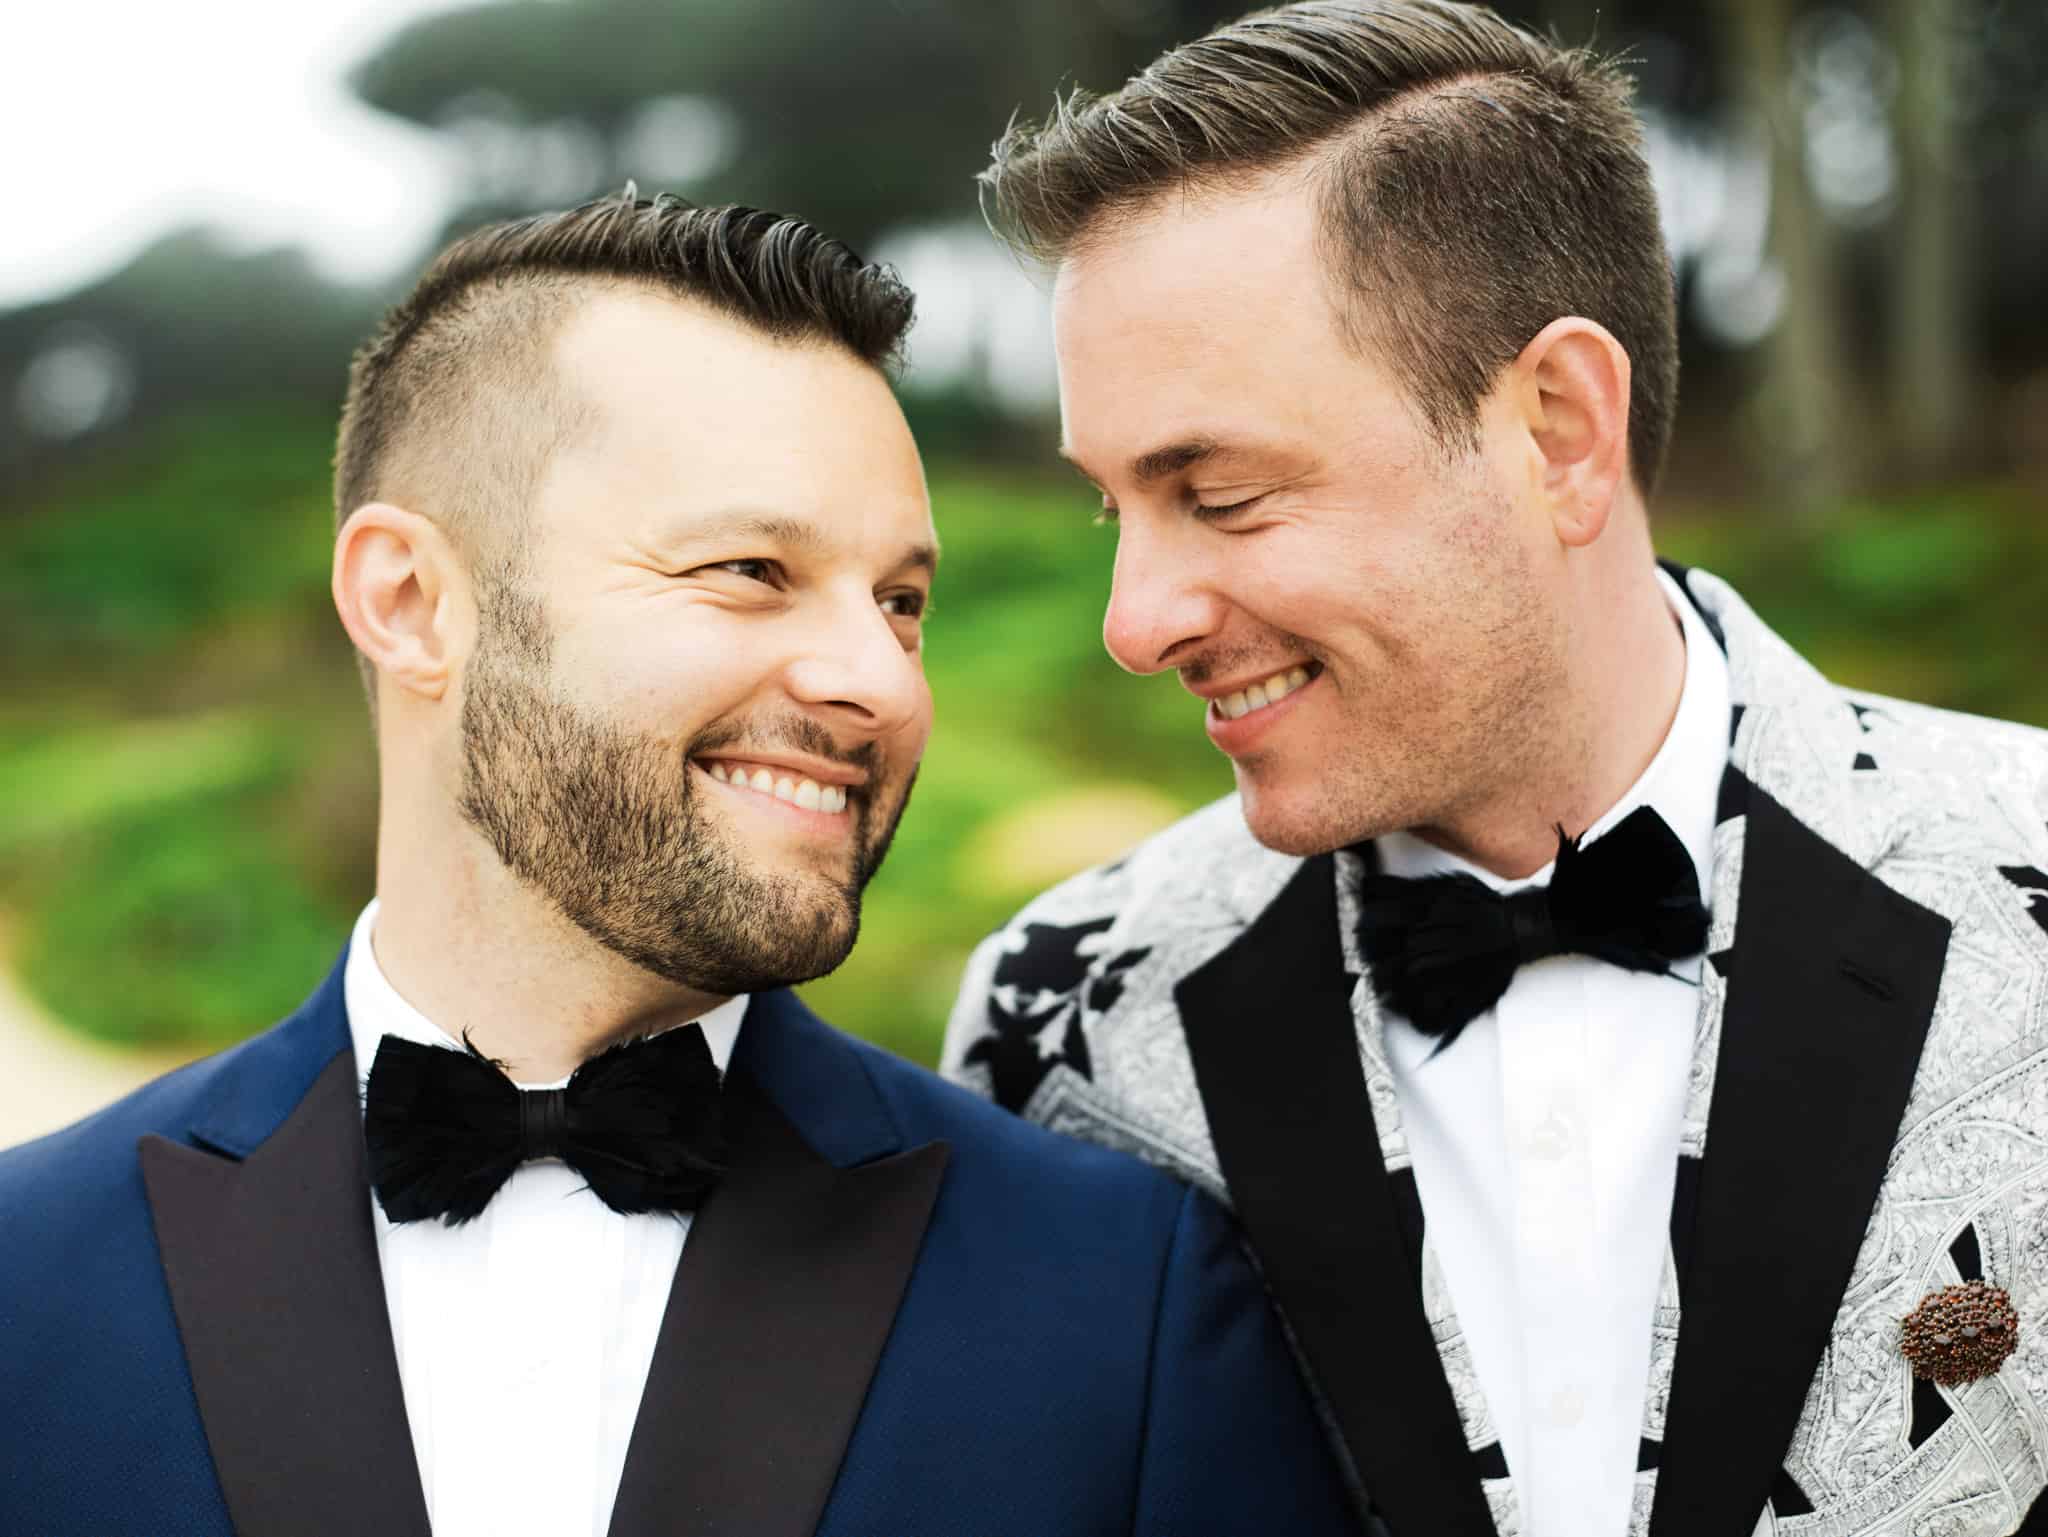 gay same sex wedding couple in san francisco wearing colorful tuxedos